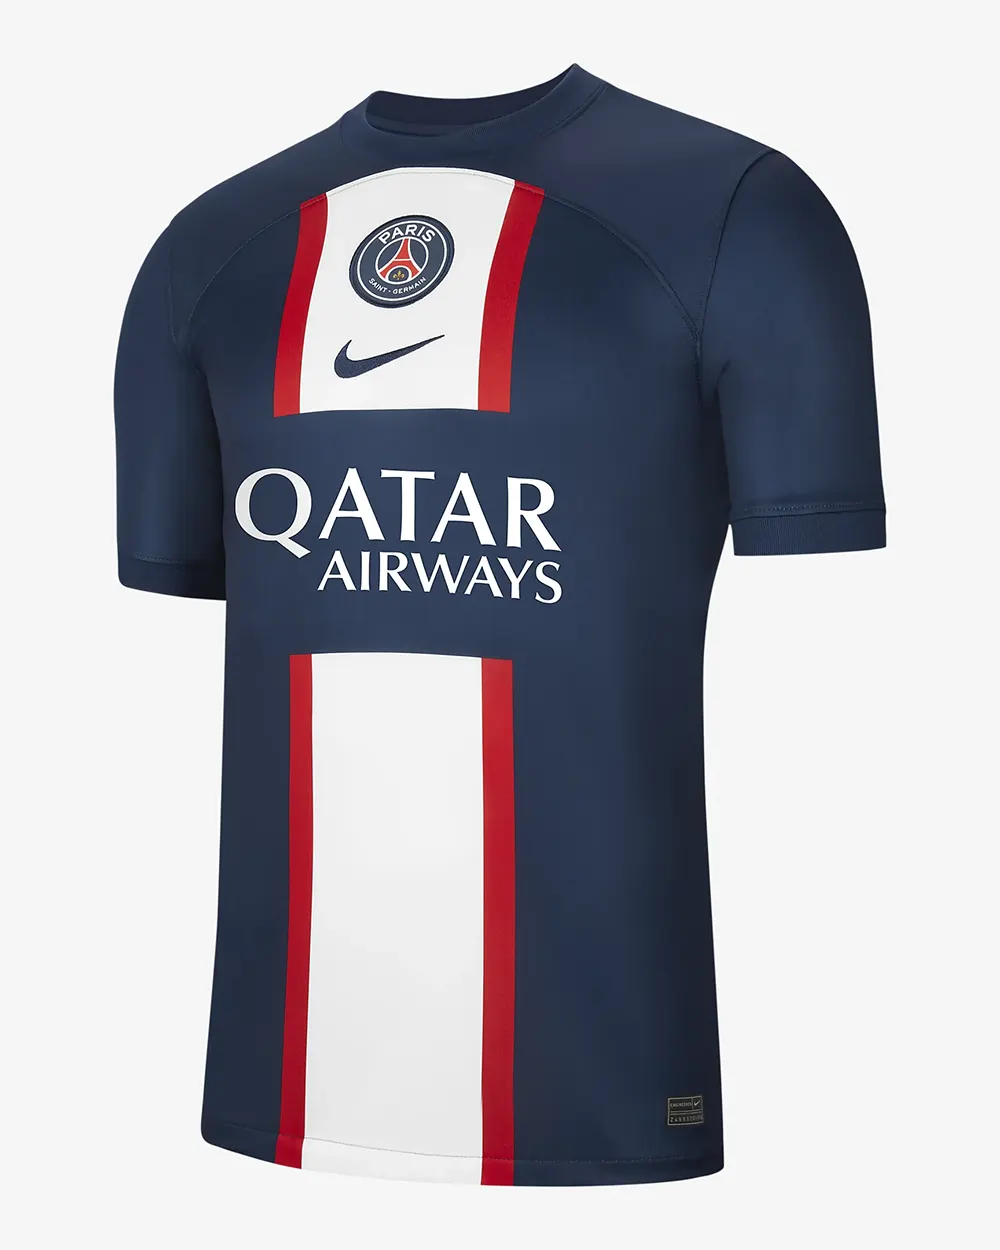 LOOK: G League online store puts out Kai 'Soto' jersey